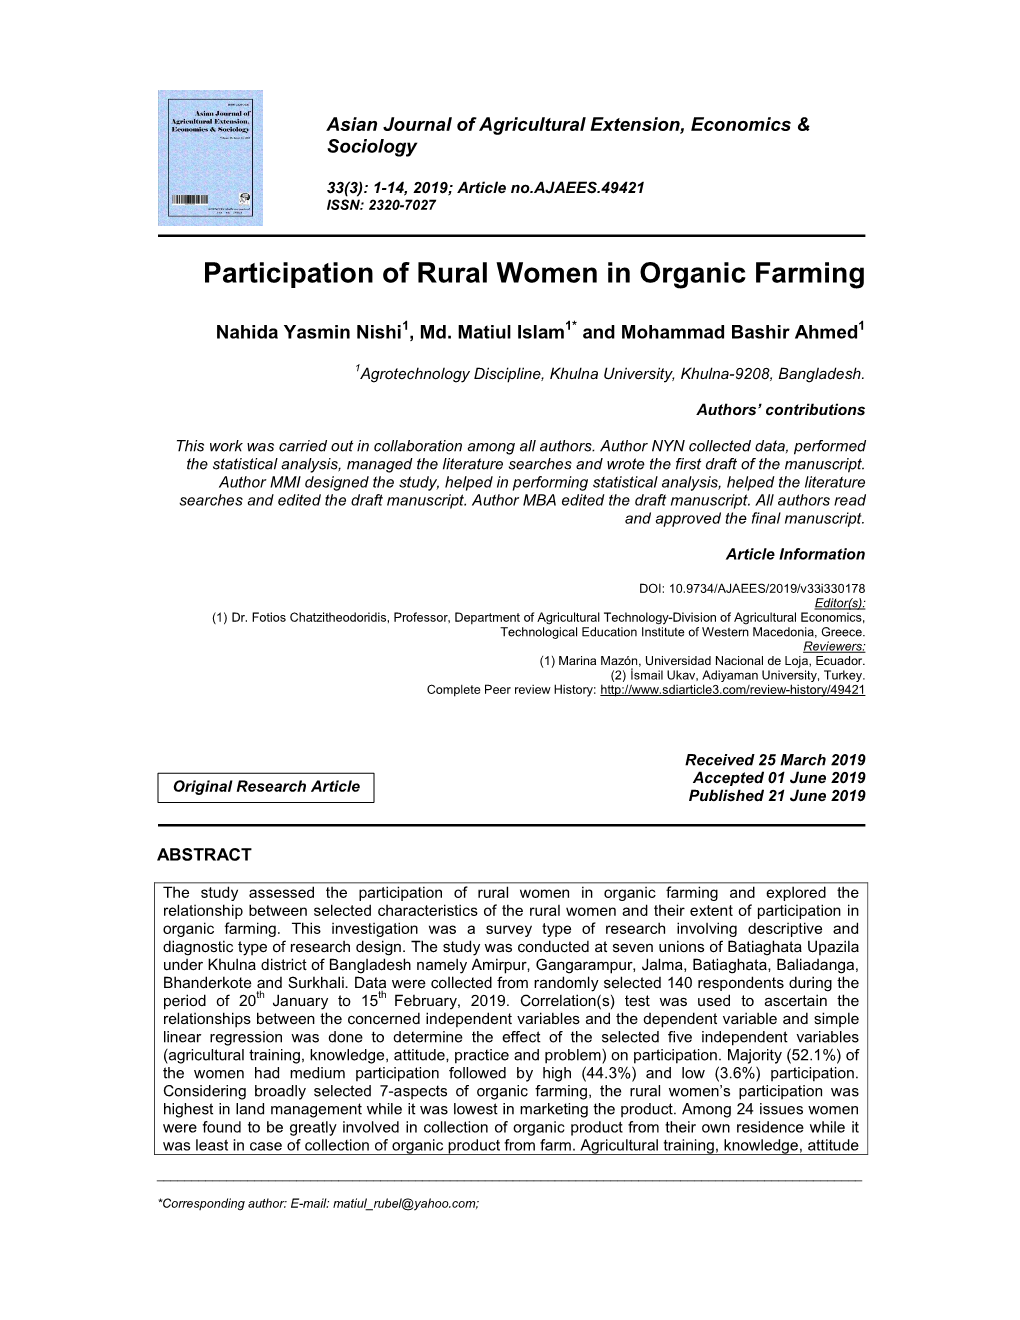 Participation of Rural Women in Organic Farming